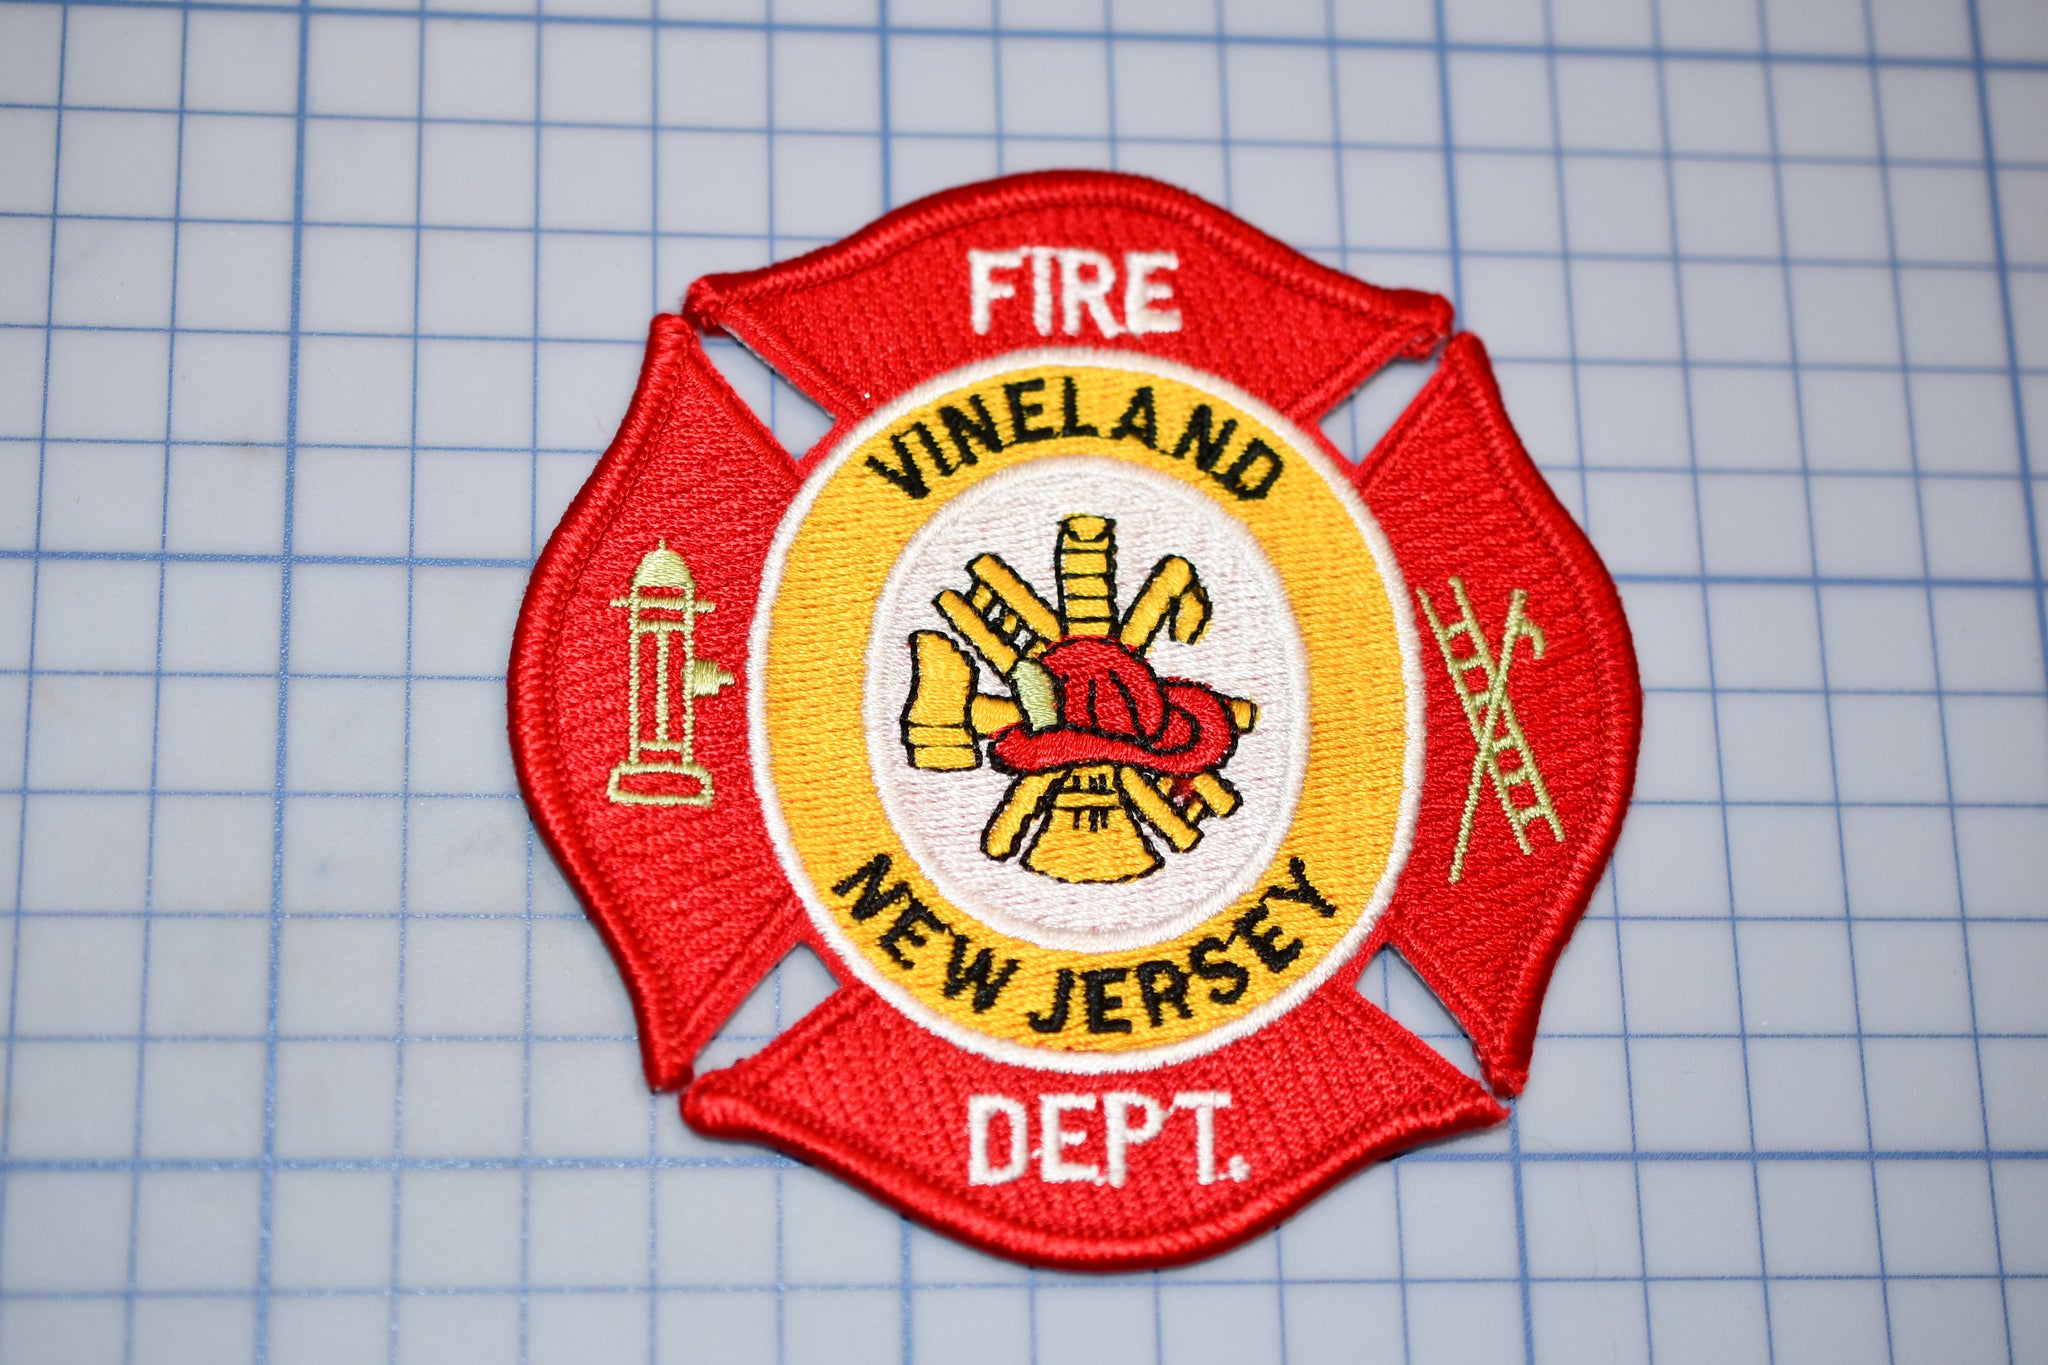 Vineland New Jersey Fire Department Patch (B29-349)